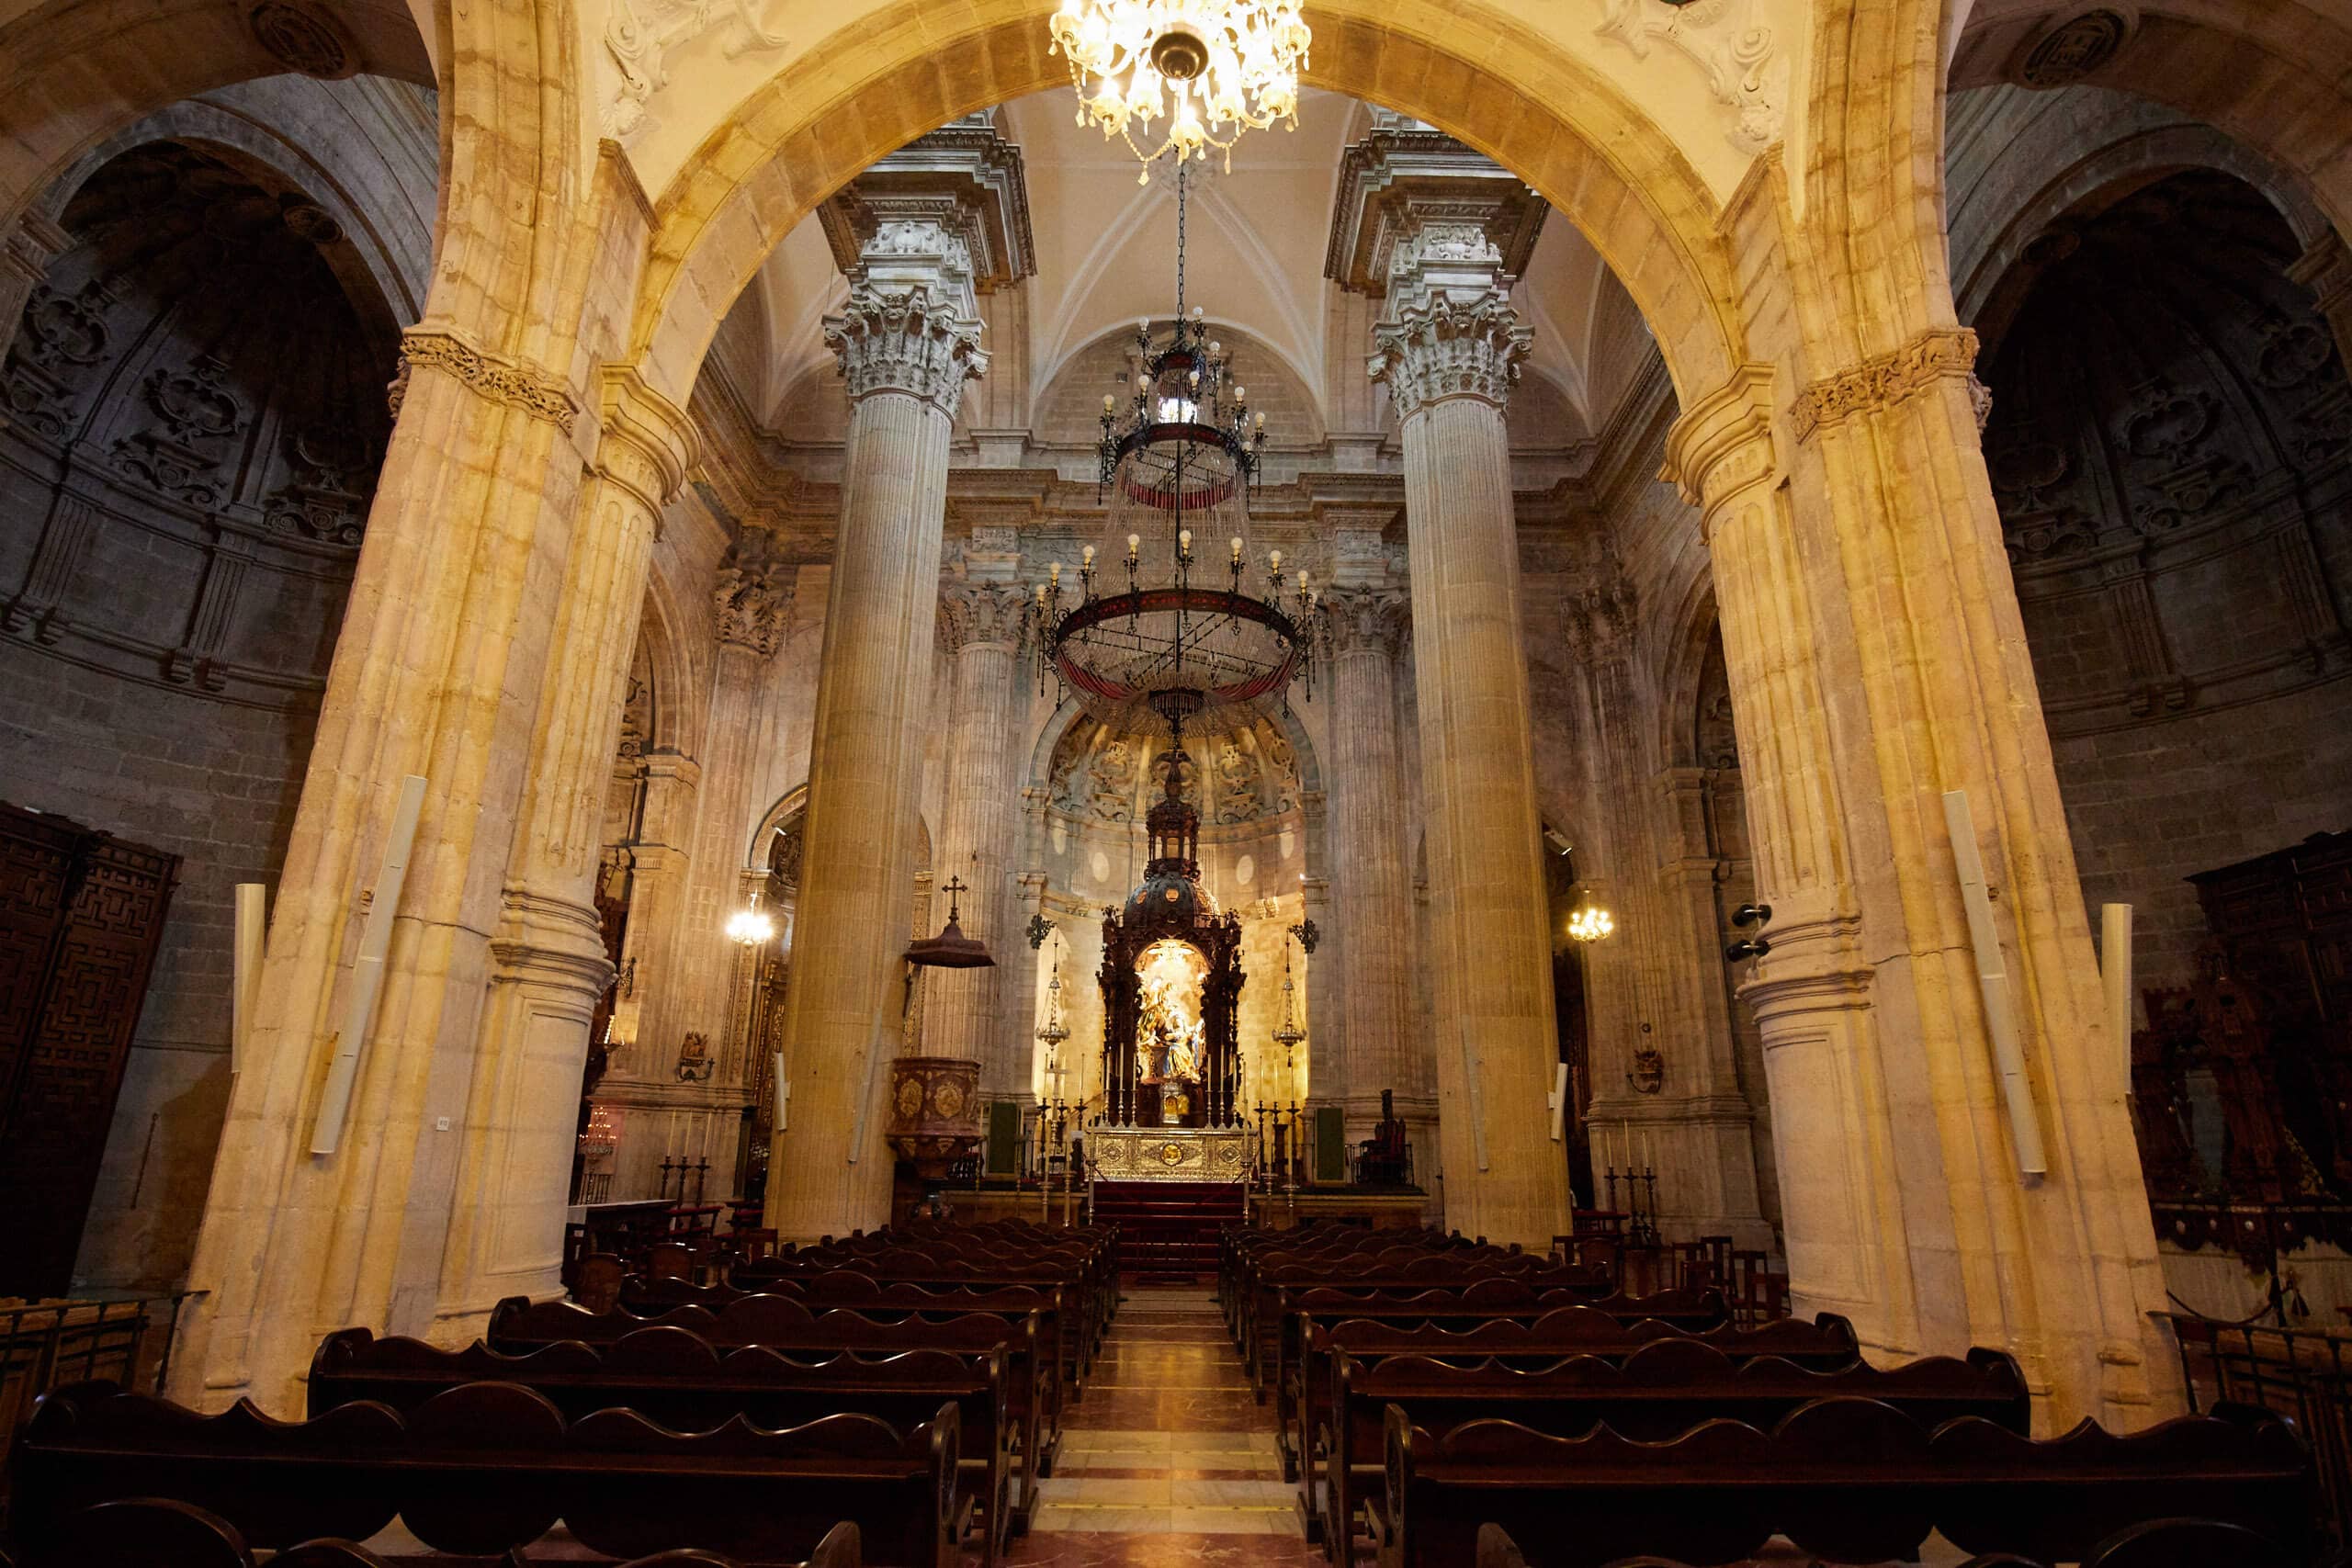 Nave of Santa Maria la Mayor church